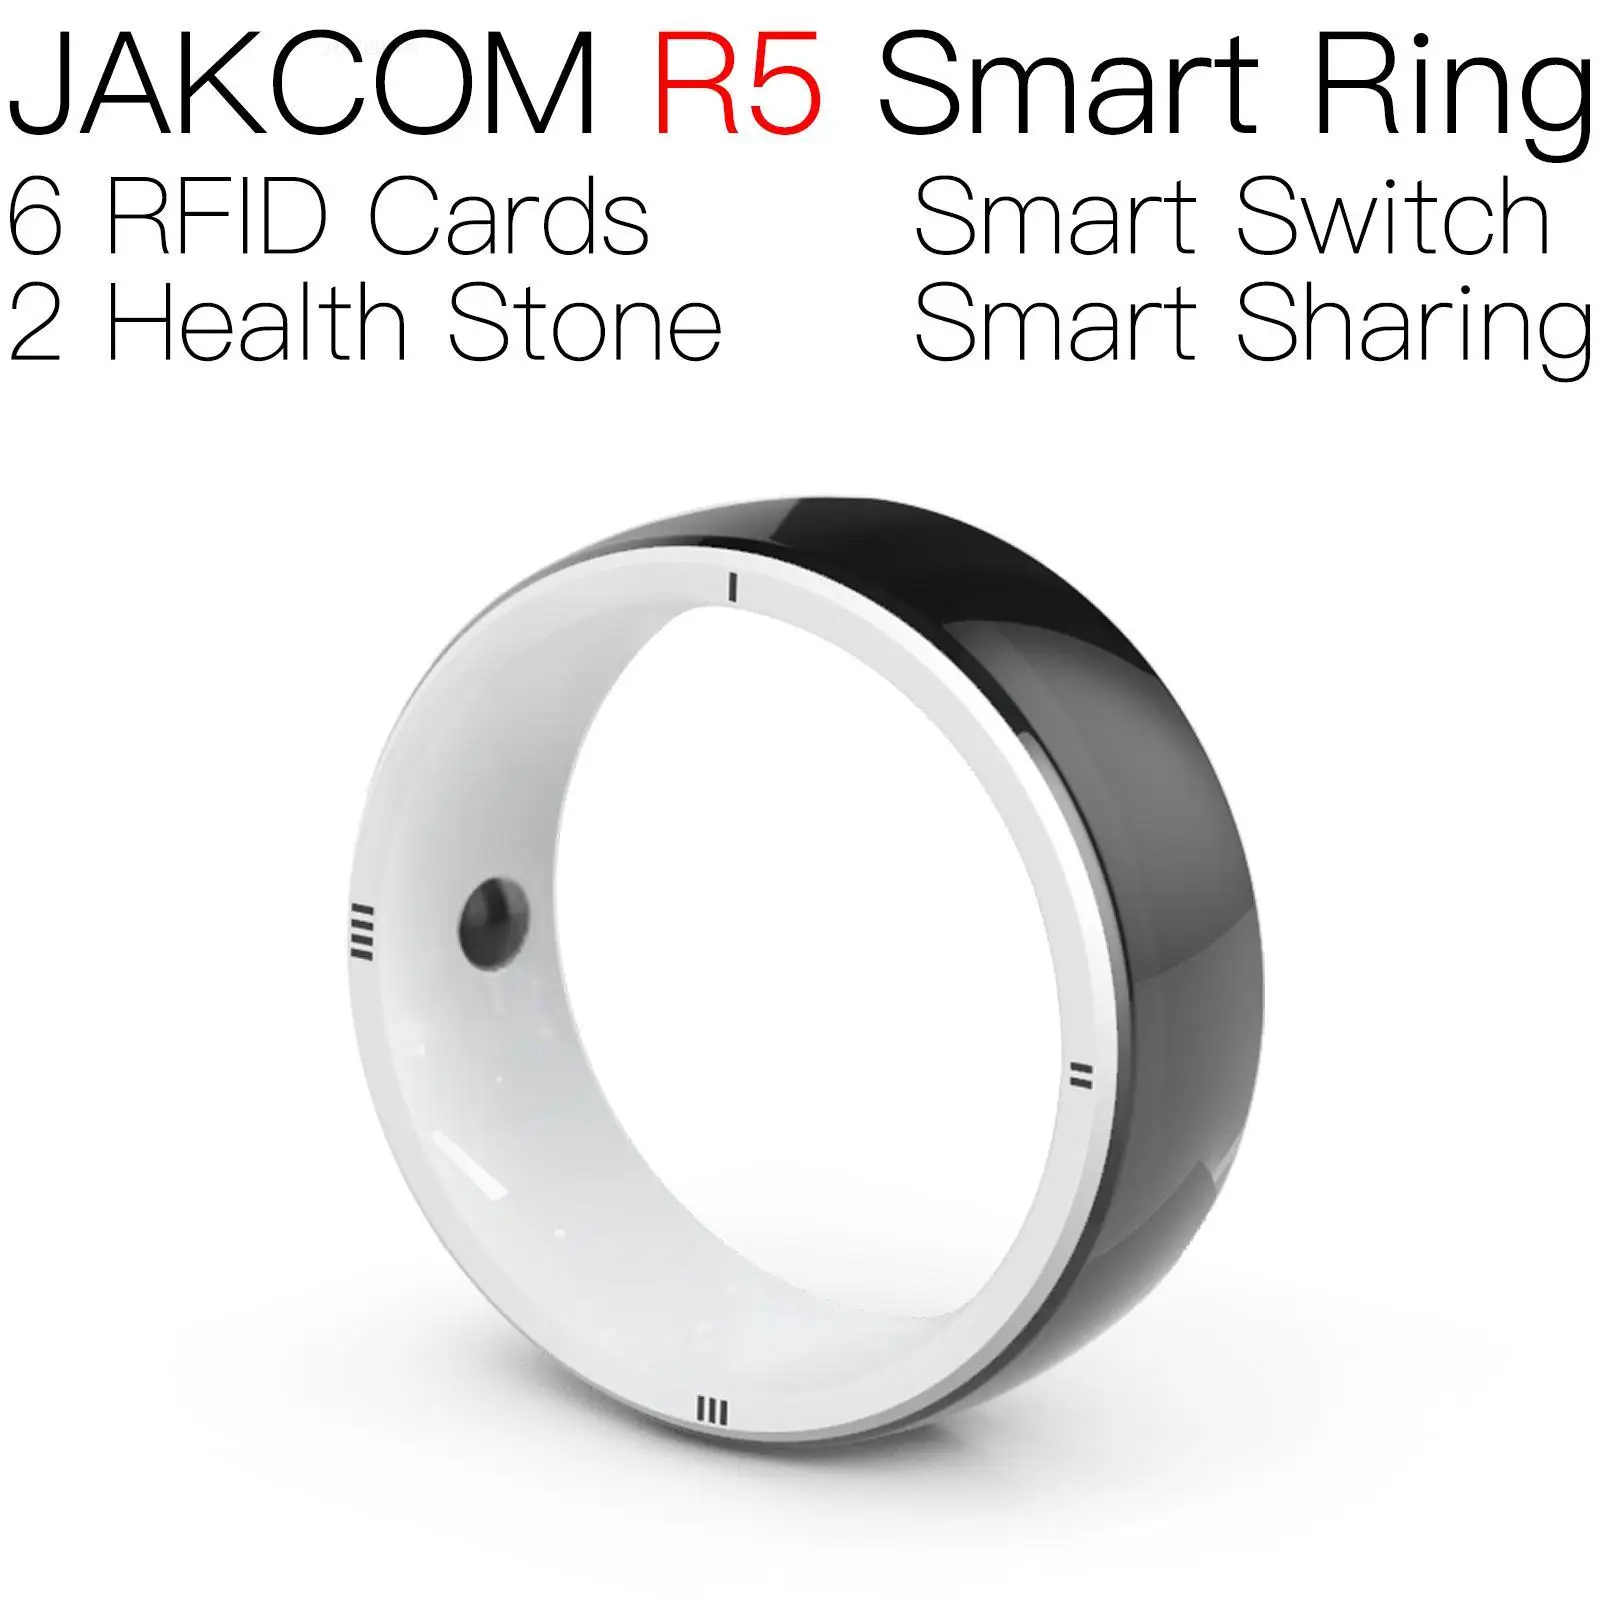 

JAKCOM R5 Smart Ring better than unfused j2a040 chip java jcop cards 2 track mag stripe sticker programming lost luggage tag